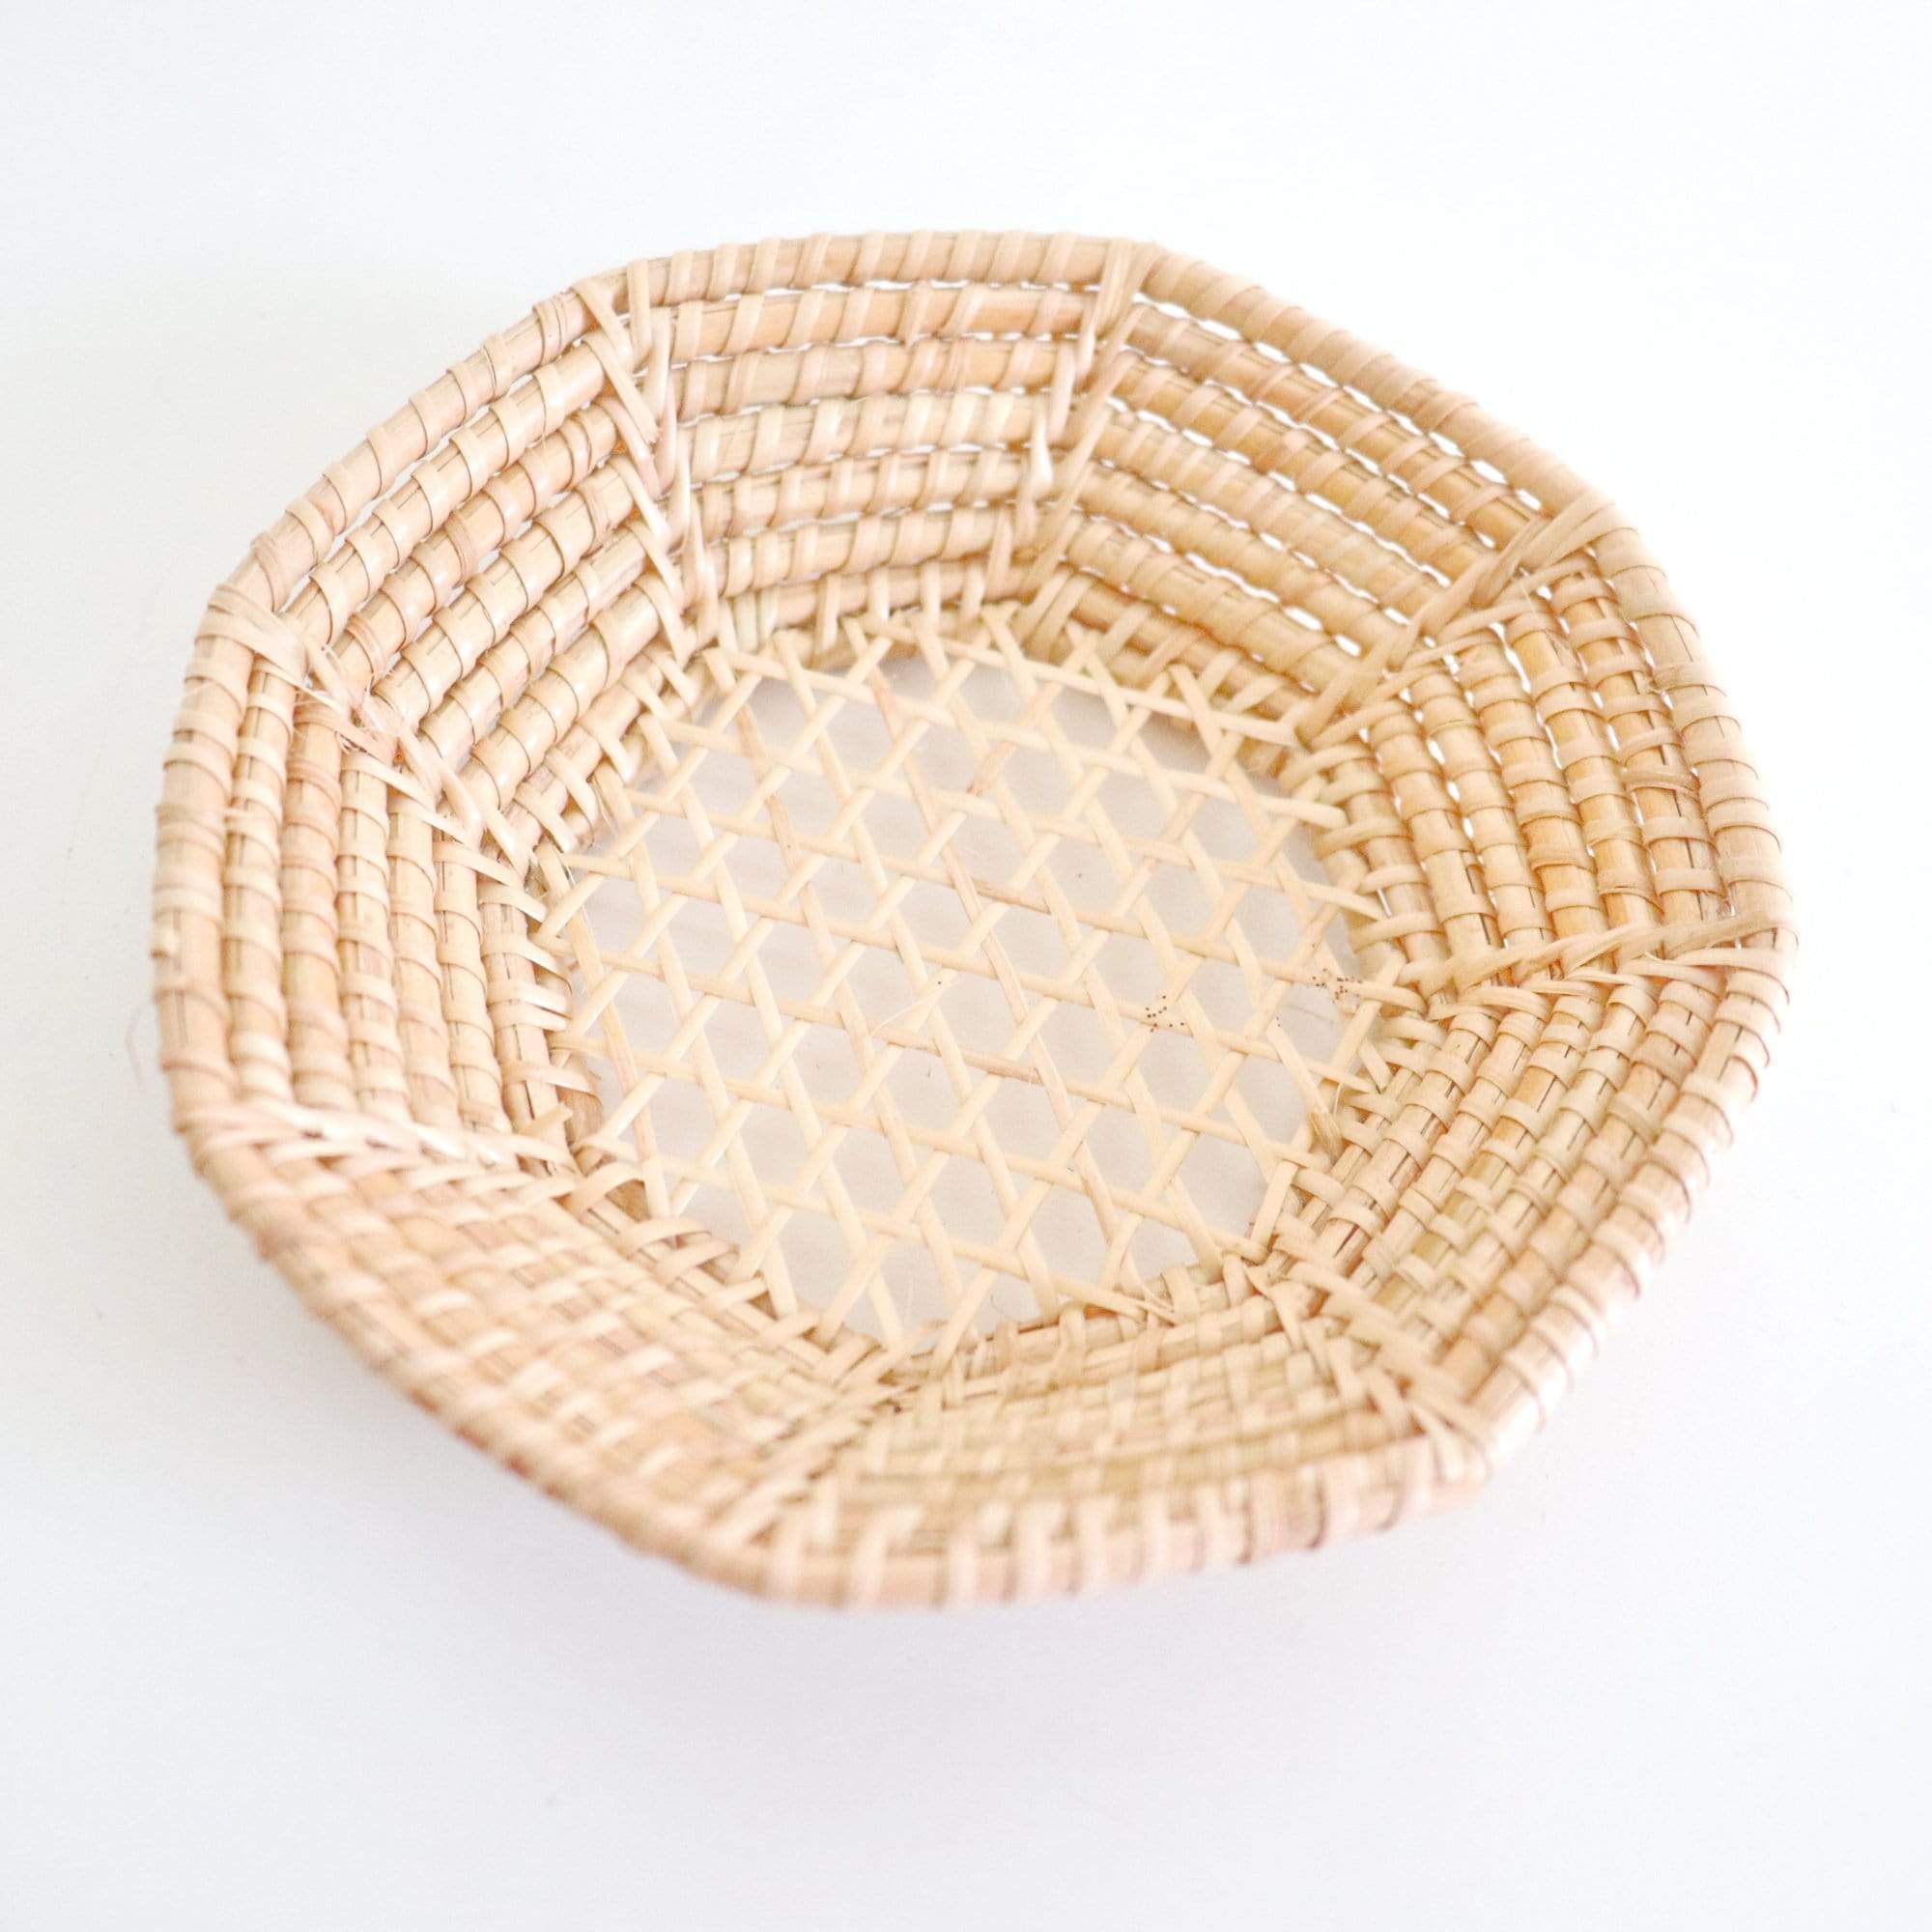 THAIHOMESHOP Baskets & Trays PUPA - OCTAGON RATTAN BASKET